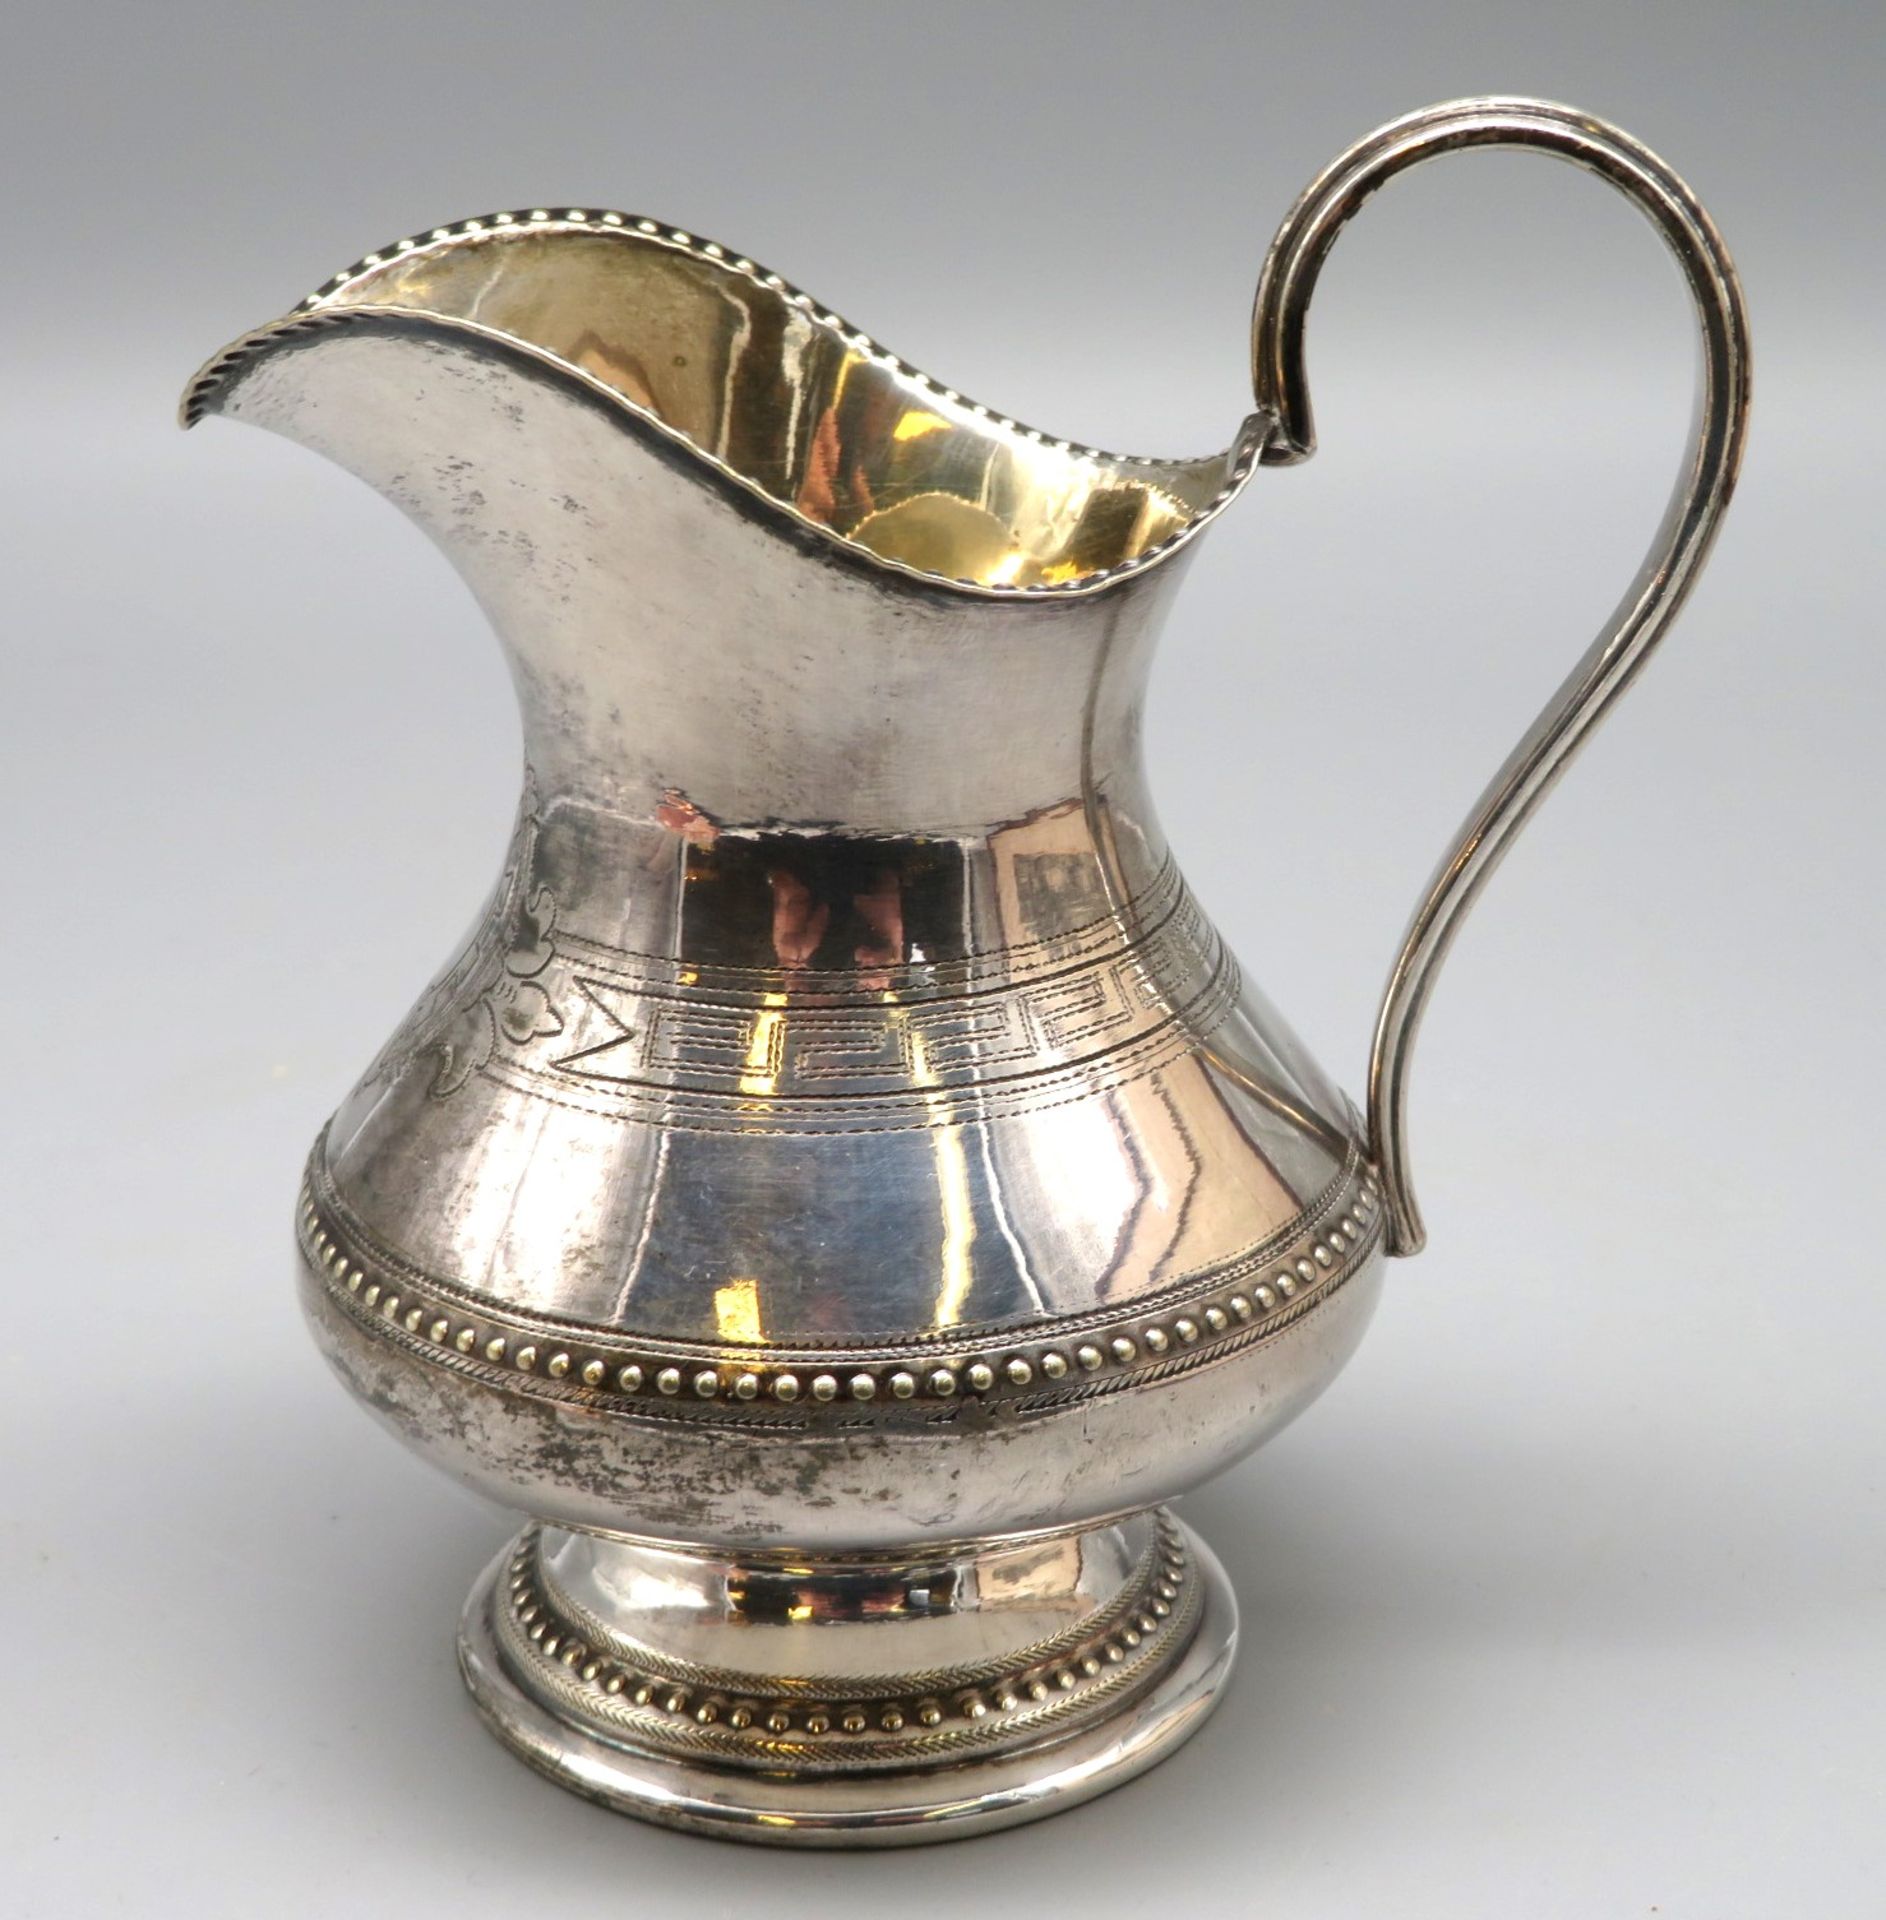 Sahnekännchen, 19. Jahrhundert, Silber 800/000, geprüft, 150 g, Innenvergoldung, umlaufender Perlra